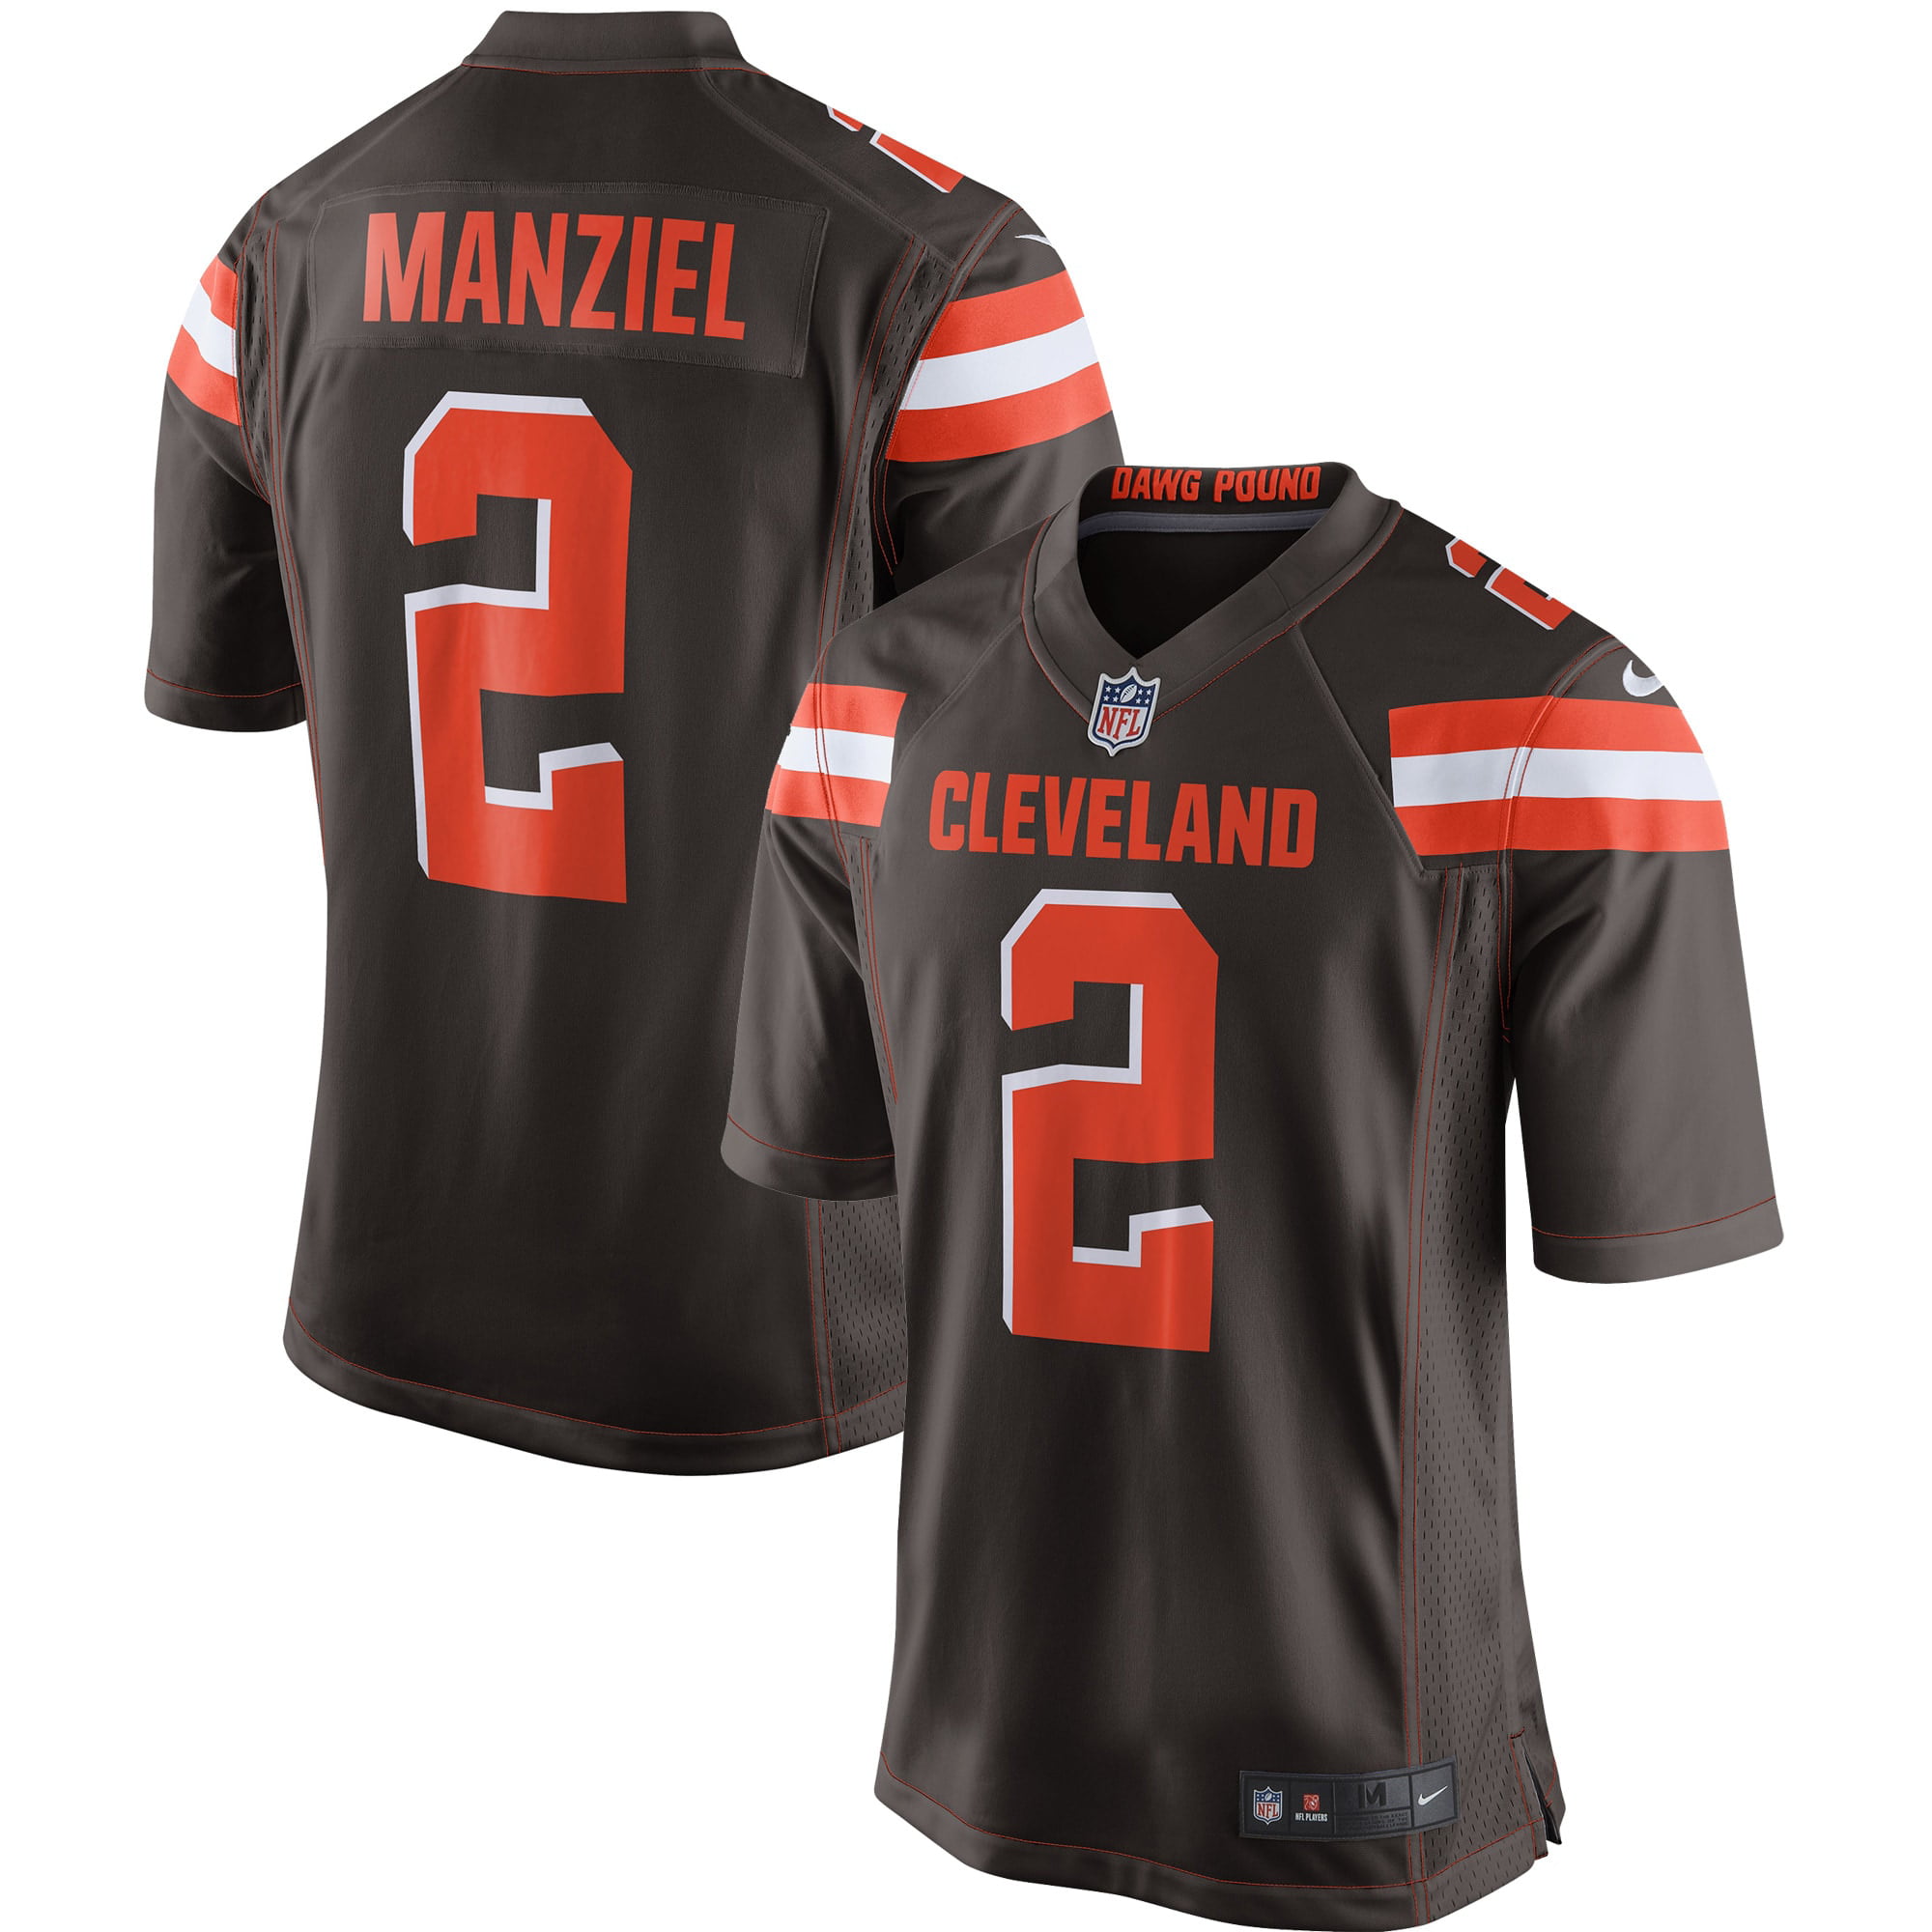 فوار انوفاري Nike Cleveland Browns #2 Johnny Manziel 2014 All Black/Gold Elite Jersey حاسبة الكتلة